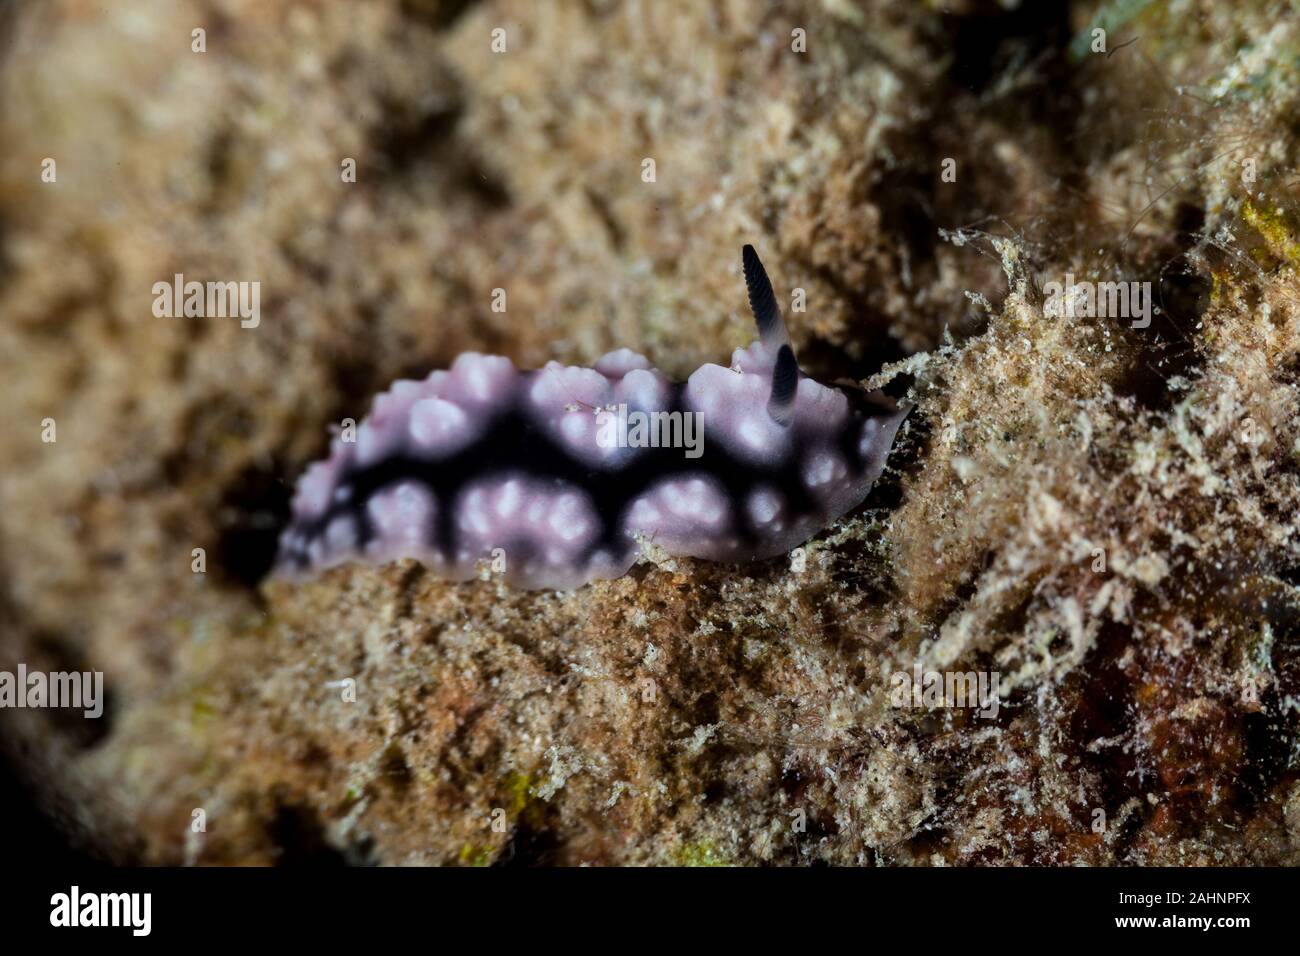 Phyllidiella, sea slugs, dorid nudibranch Stock Photo